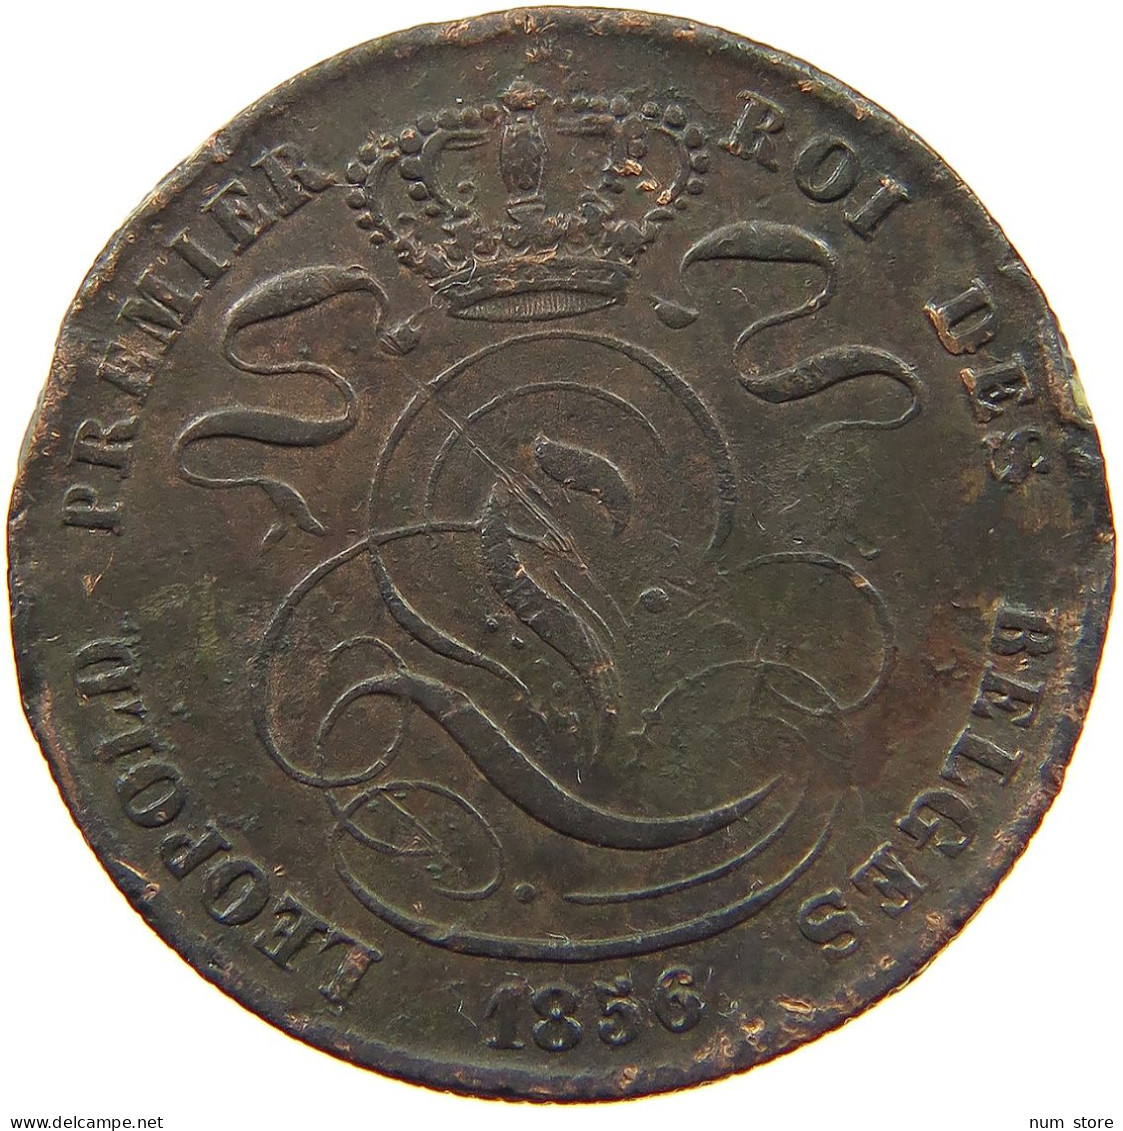 BELGIUM 5 CENTIMES 1856 Leopold I. (1831-1865) #a007 0321 - 5 Cents